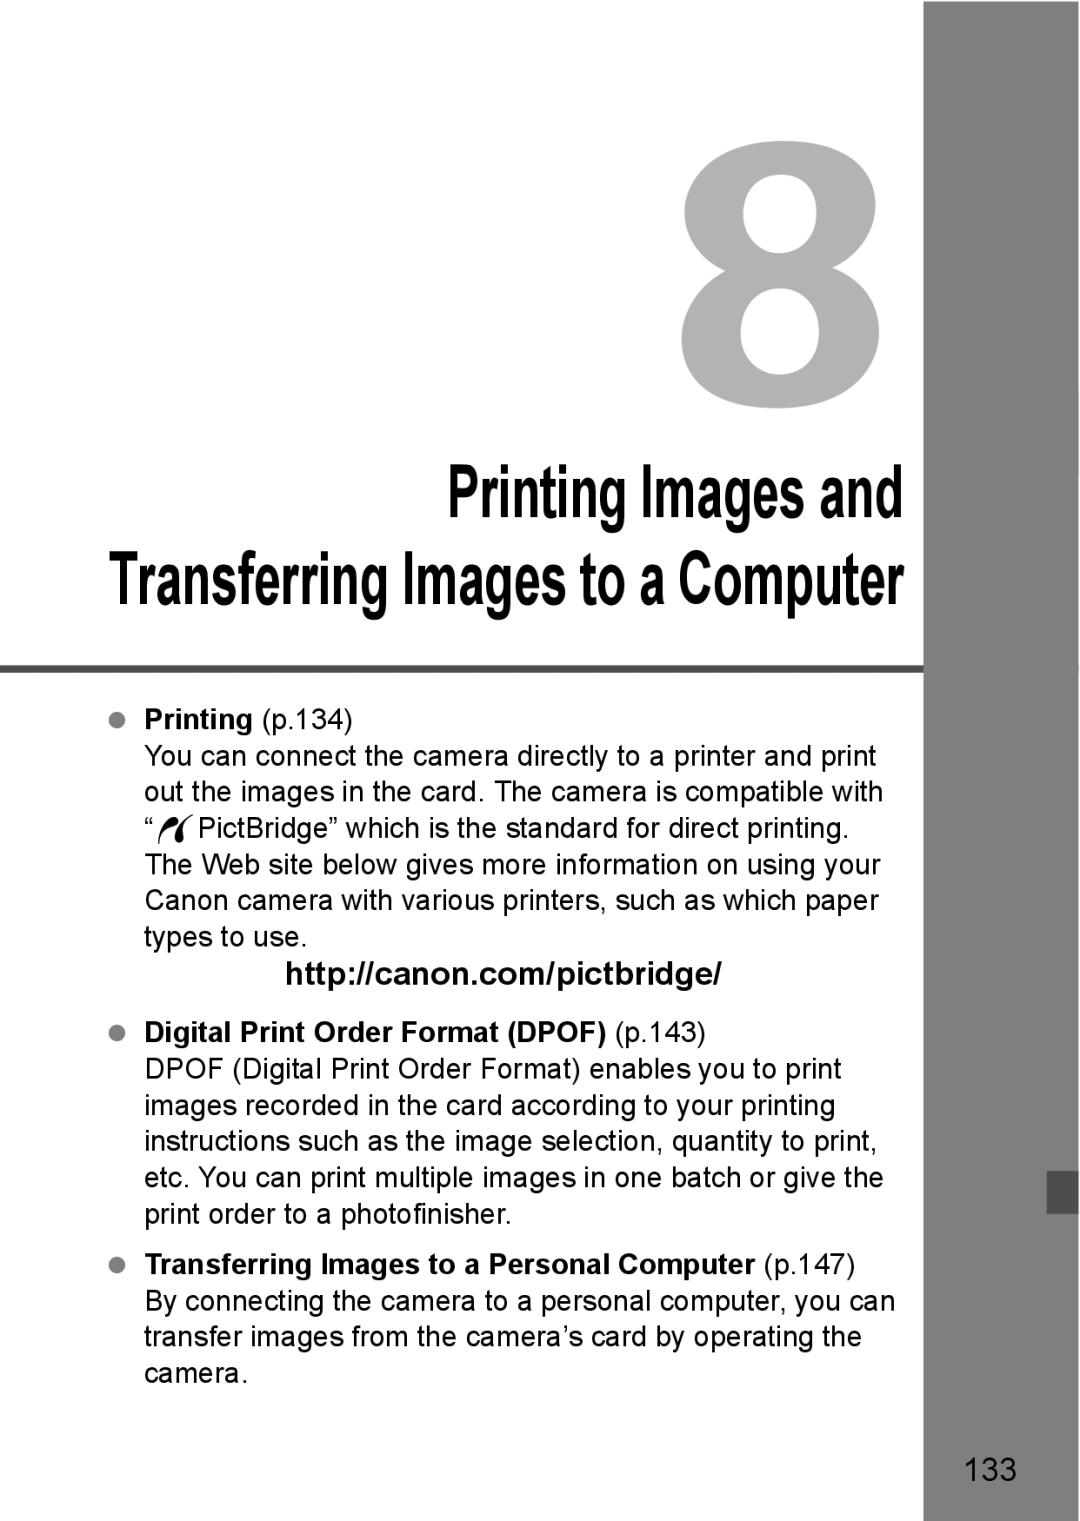 Canon EOS 450D instruction manual 133, Printing p.134, Digital Print Order Format Dpof p.143 